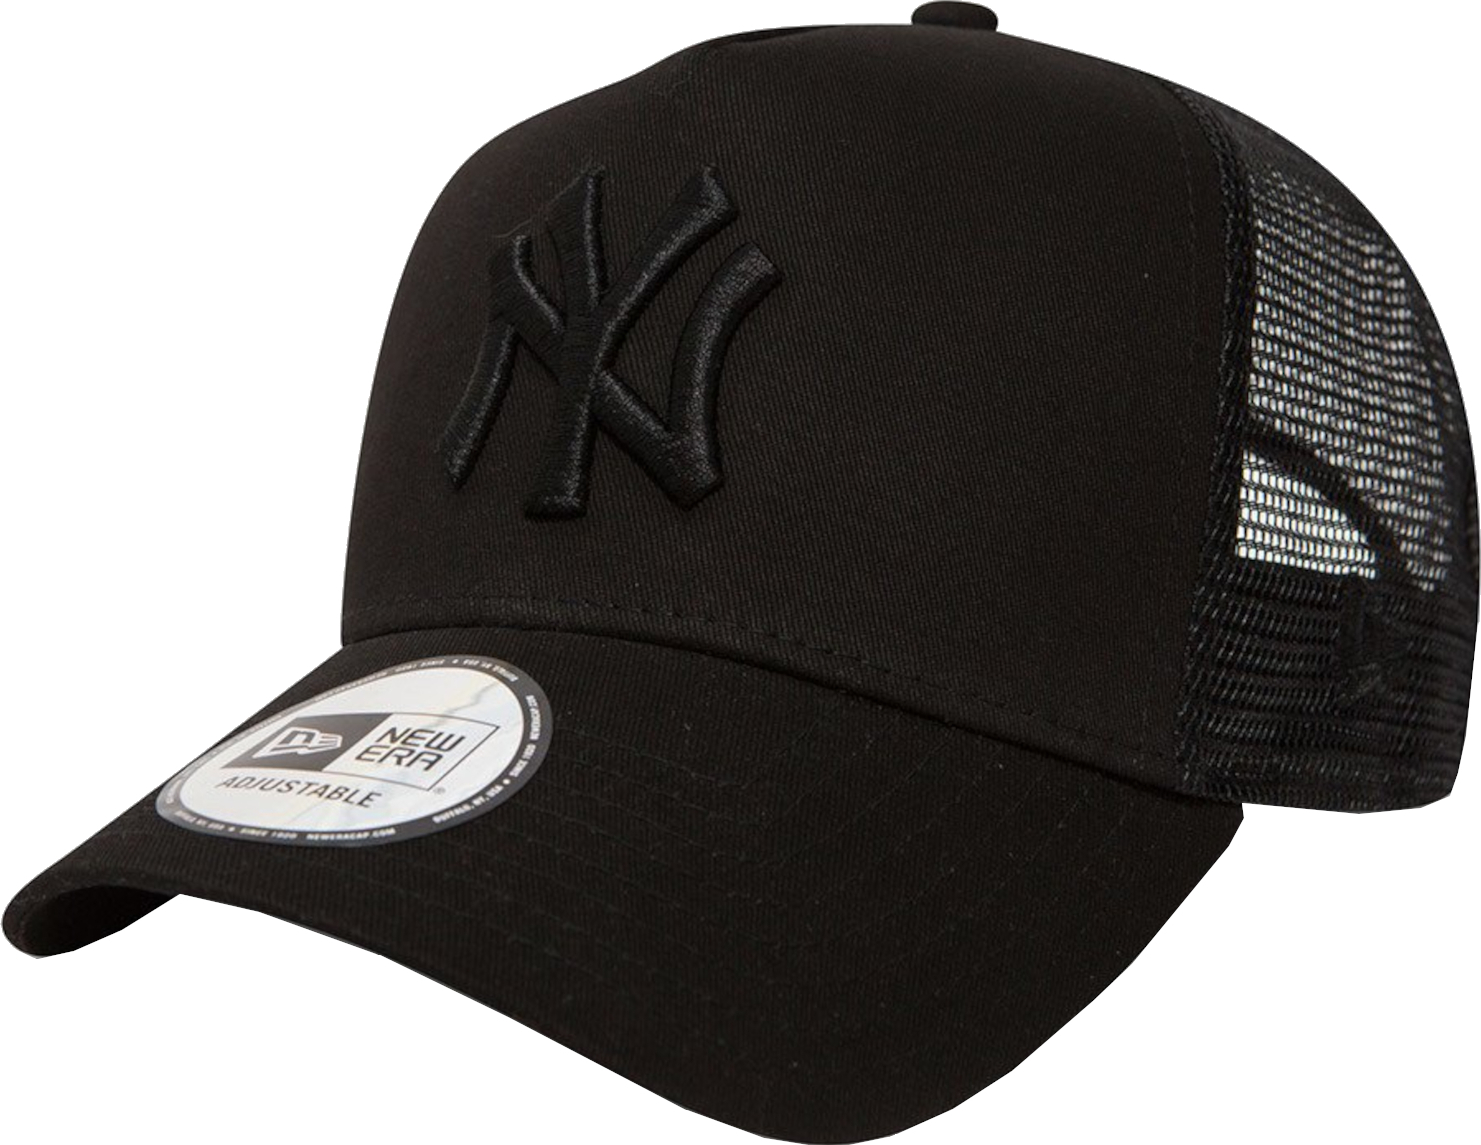 ČIERNA ŠILTOVKA NEW ERA CLEAN TRUCKER NEW YORK YANKEES MLB CAP 11579474 Veľkosť: ONE SIZE